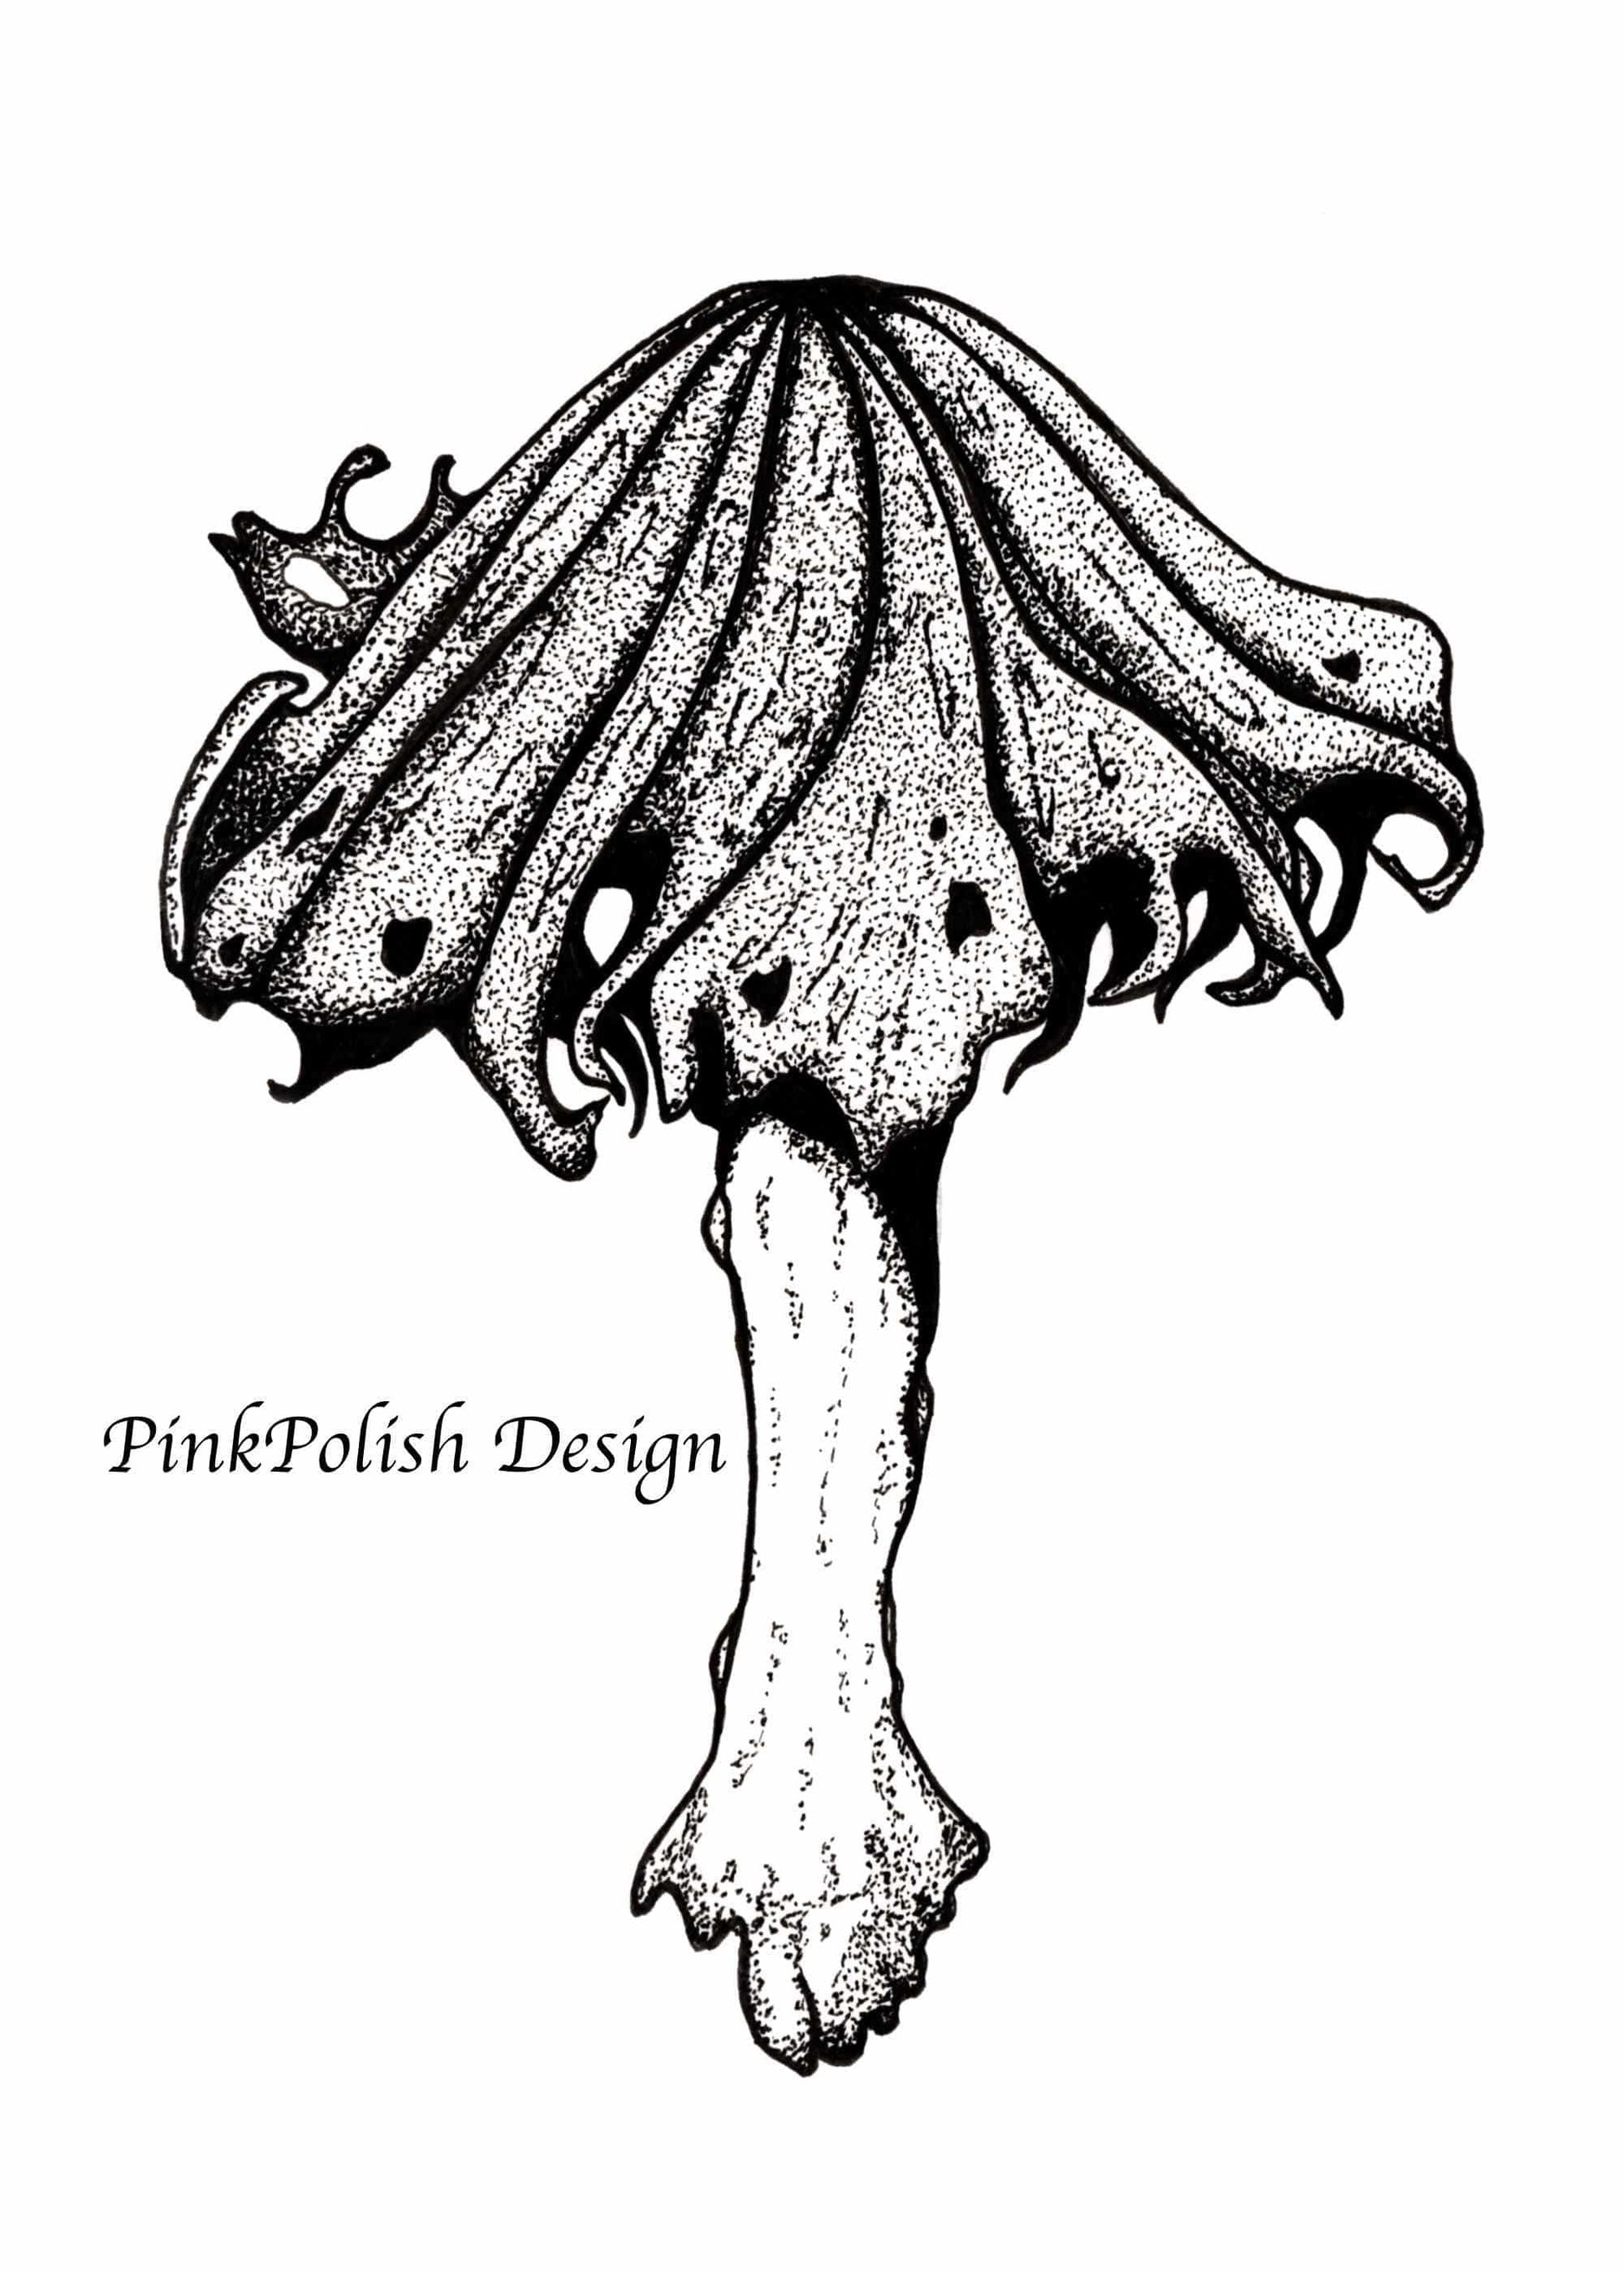 PinkPolish Design Art Prints "Alcohol Inky Mushroom" Ink Drawing: Art Print